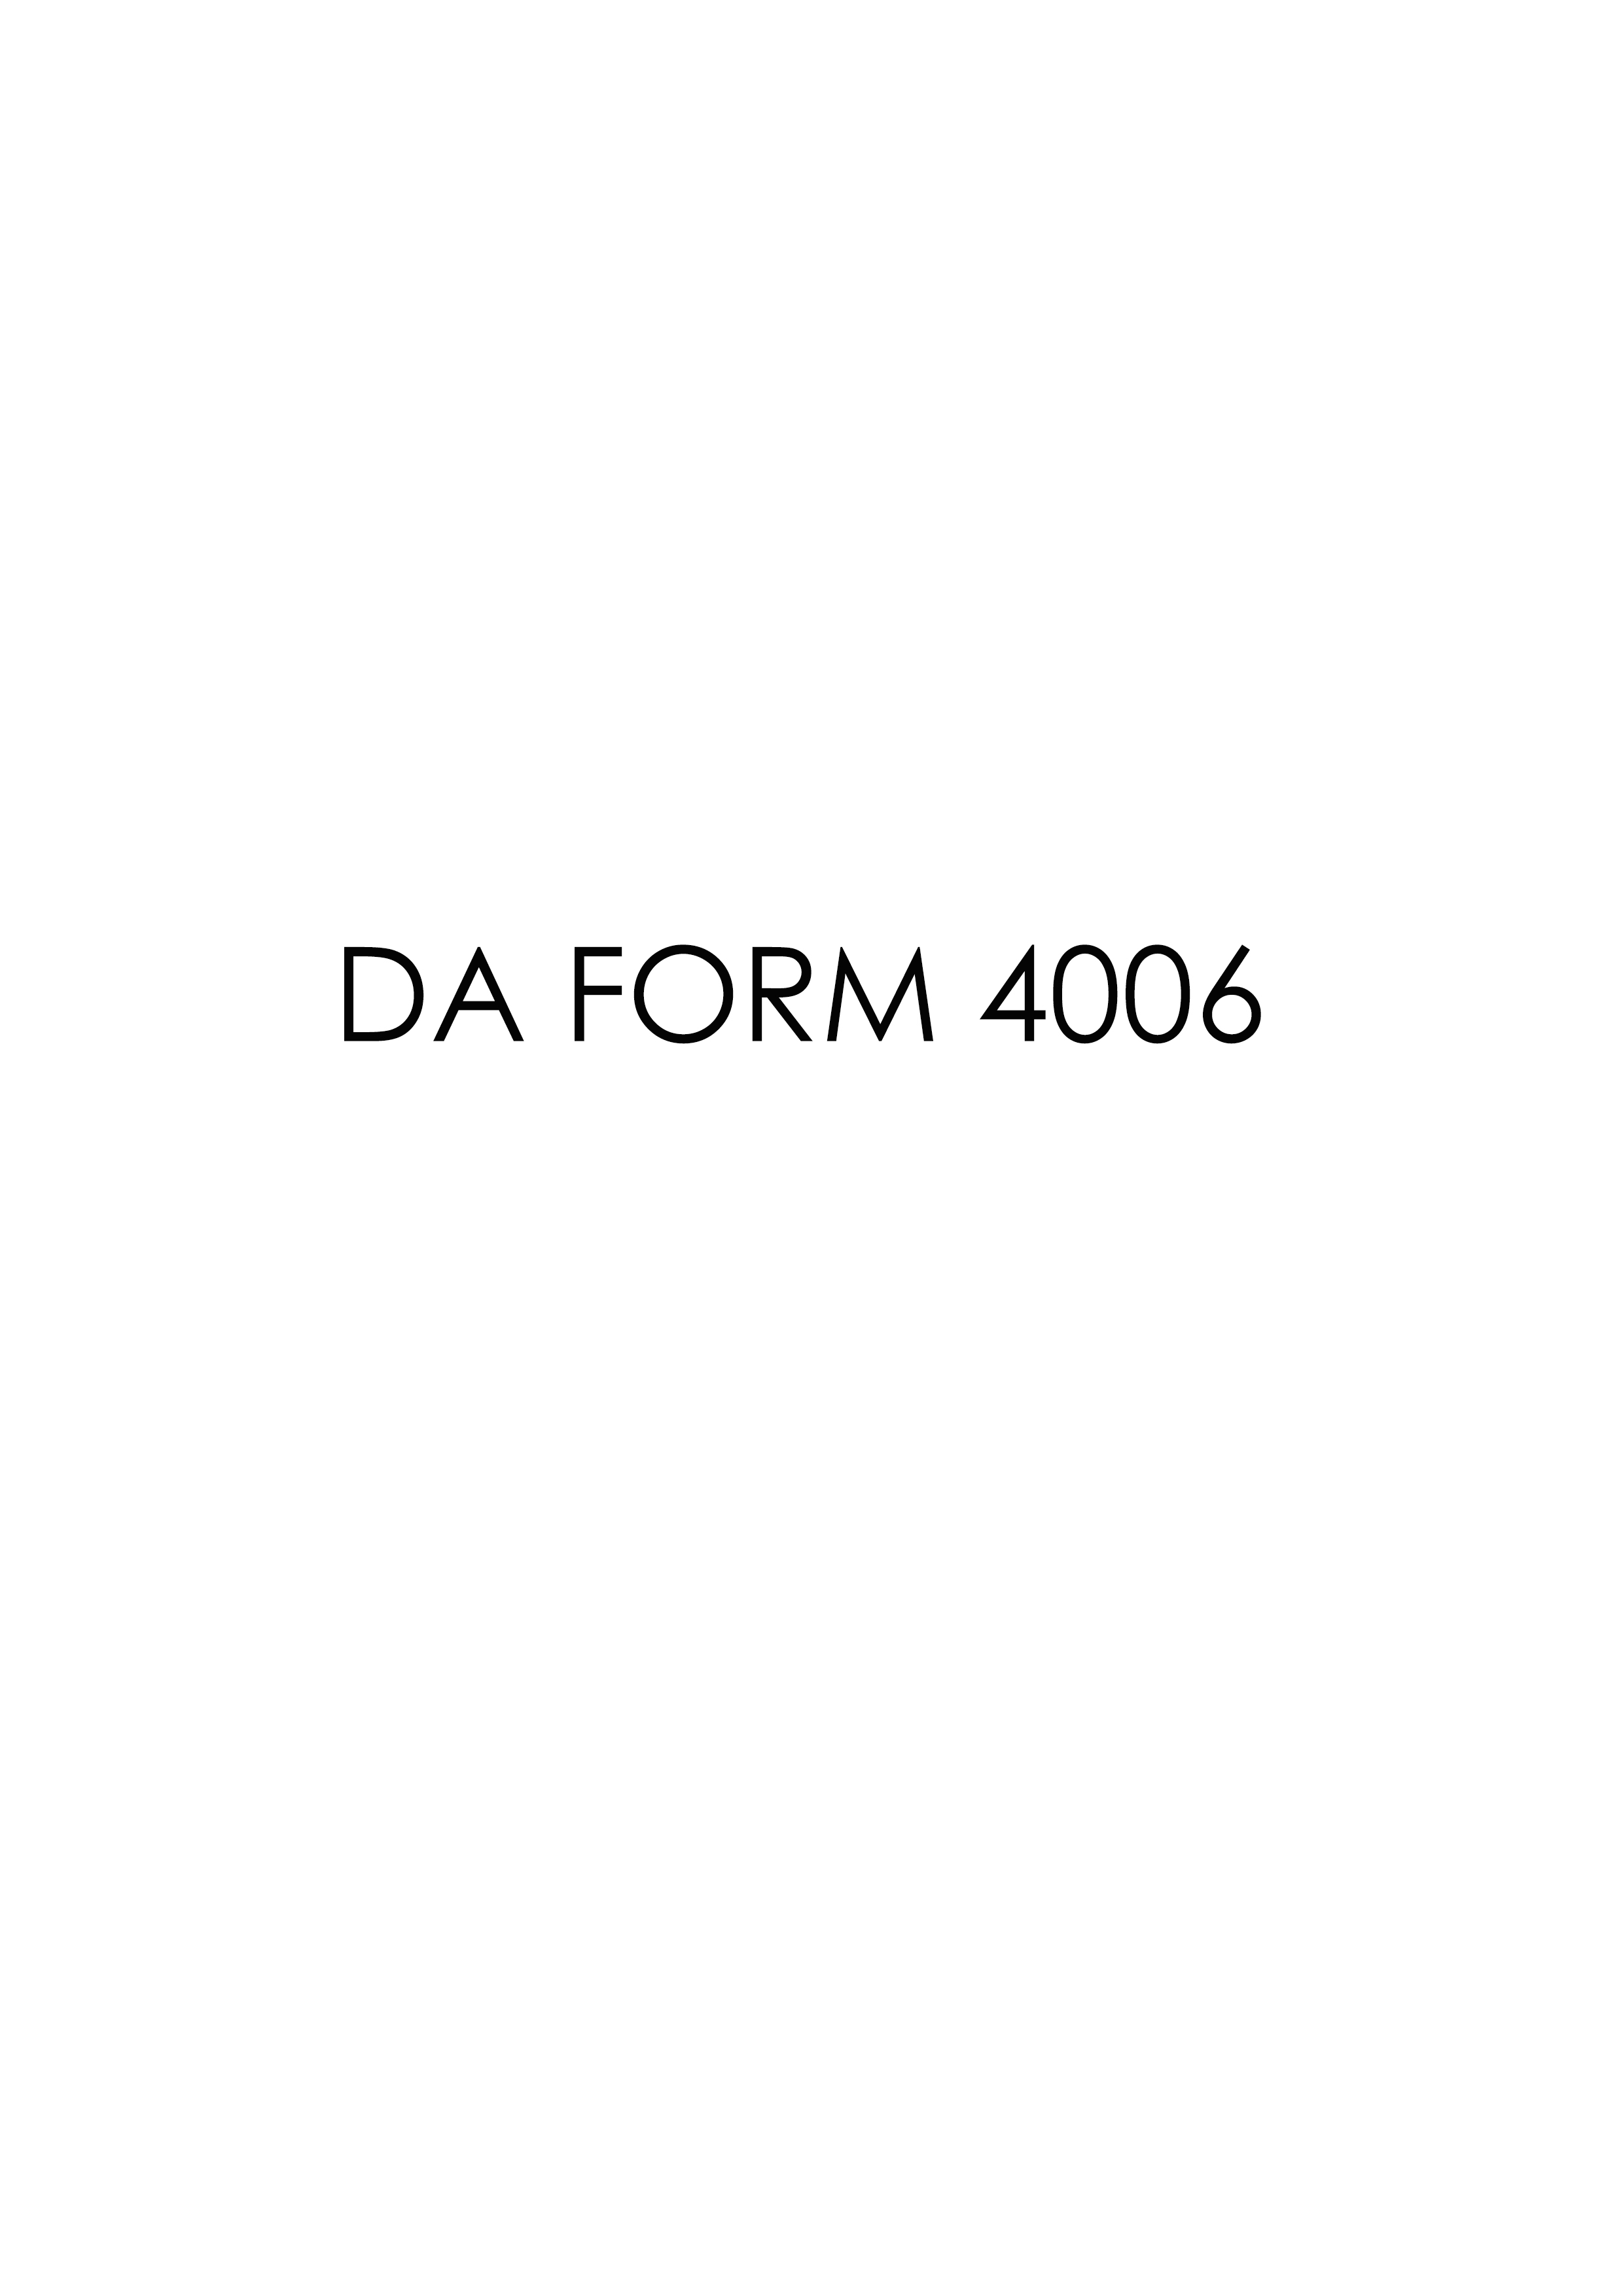 da Form 4006 fillable